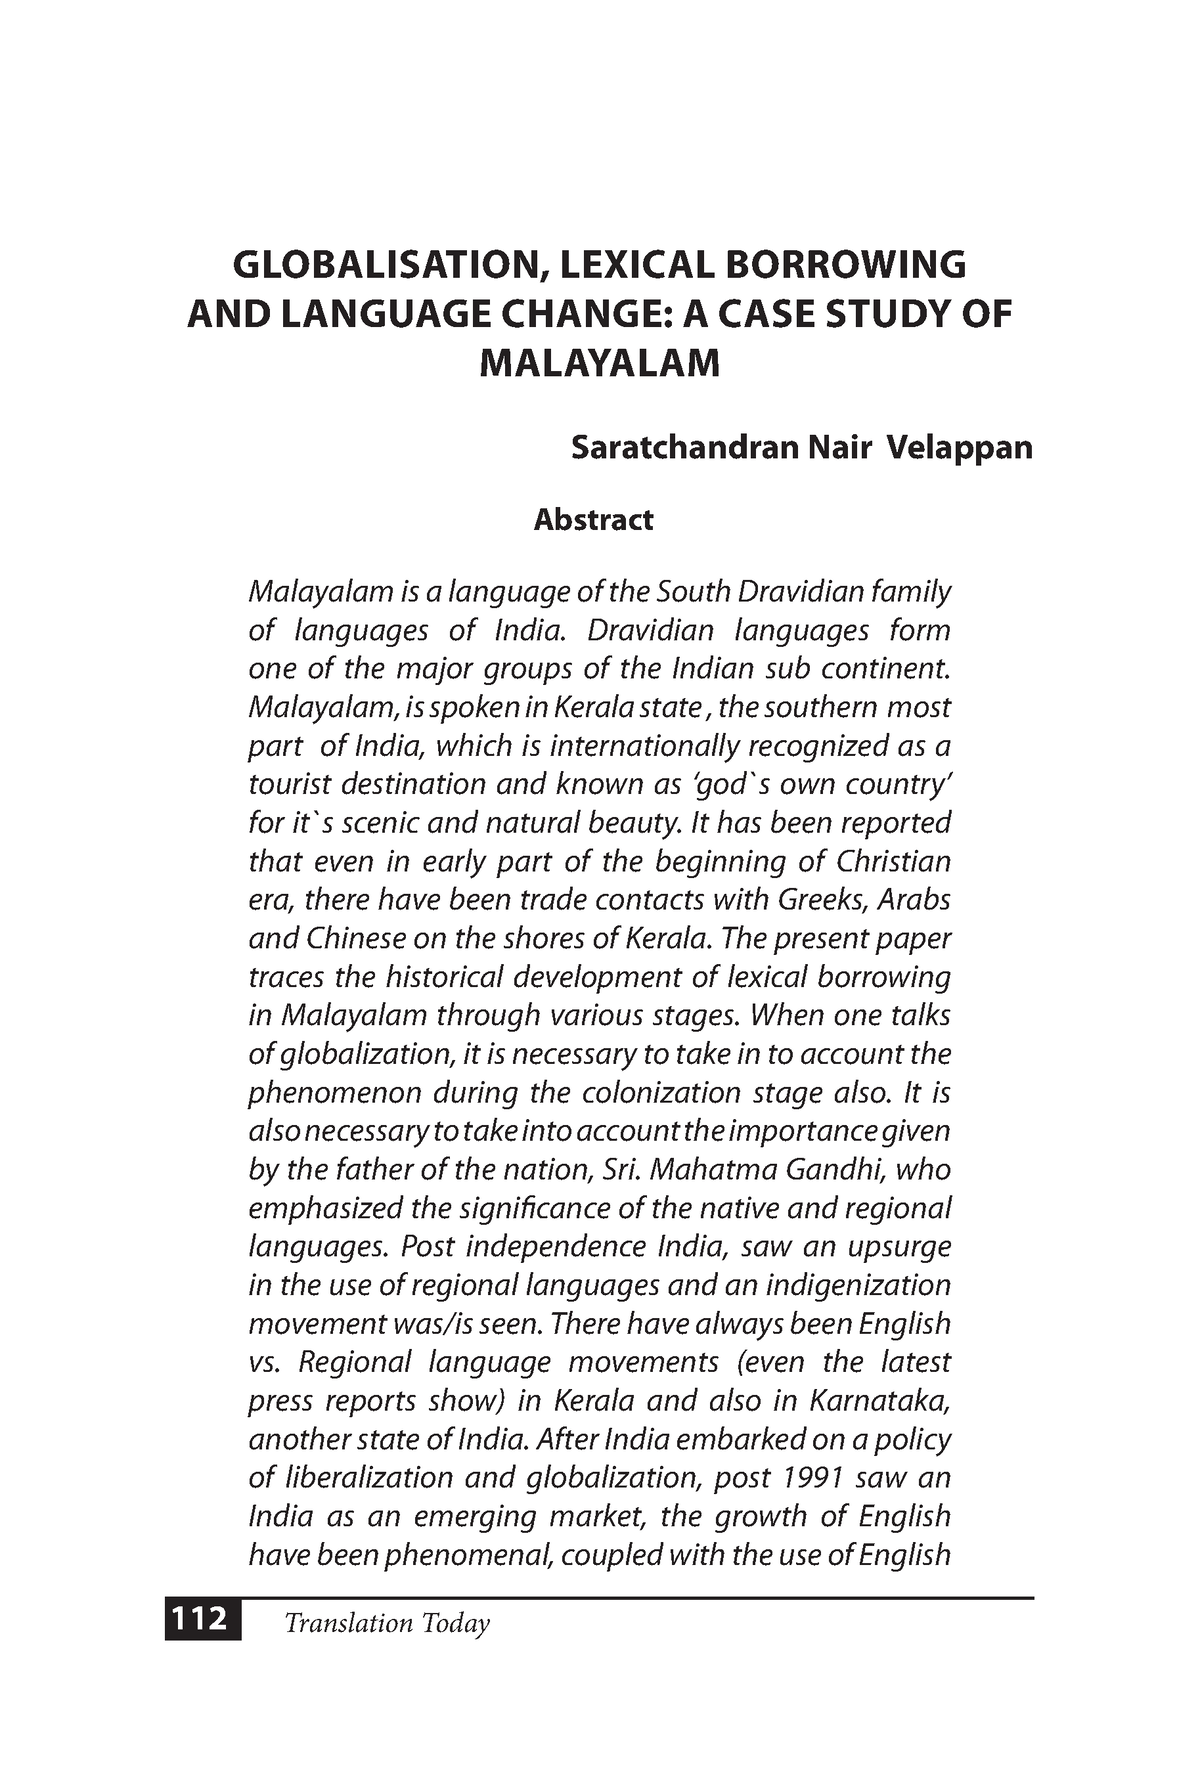 globalisation essay malayalam